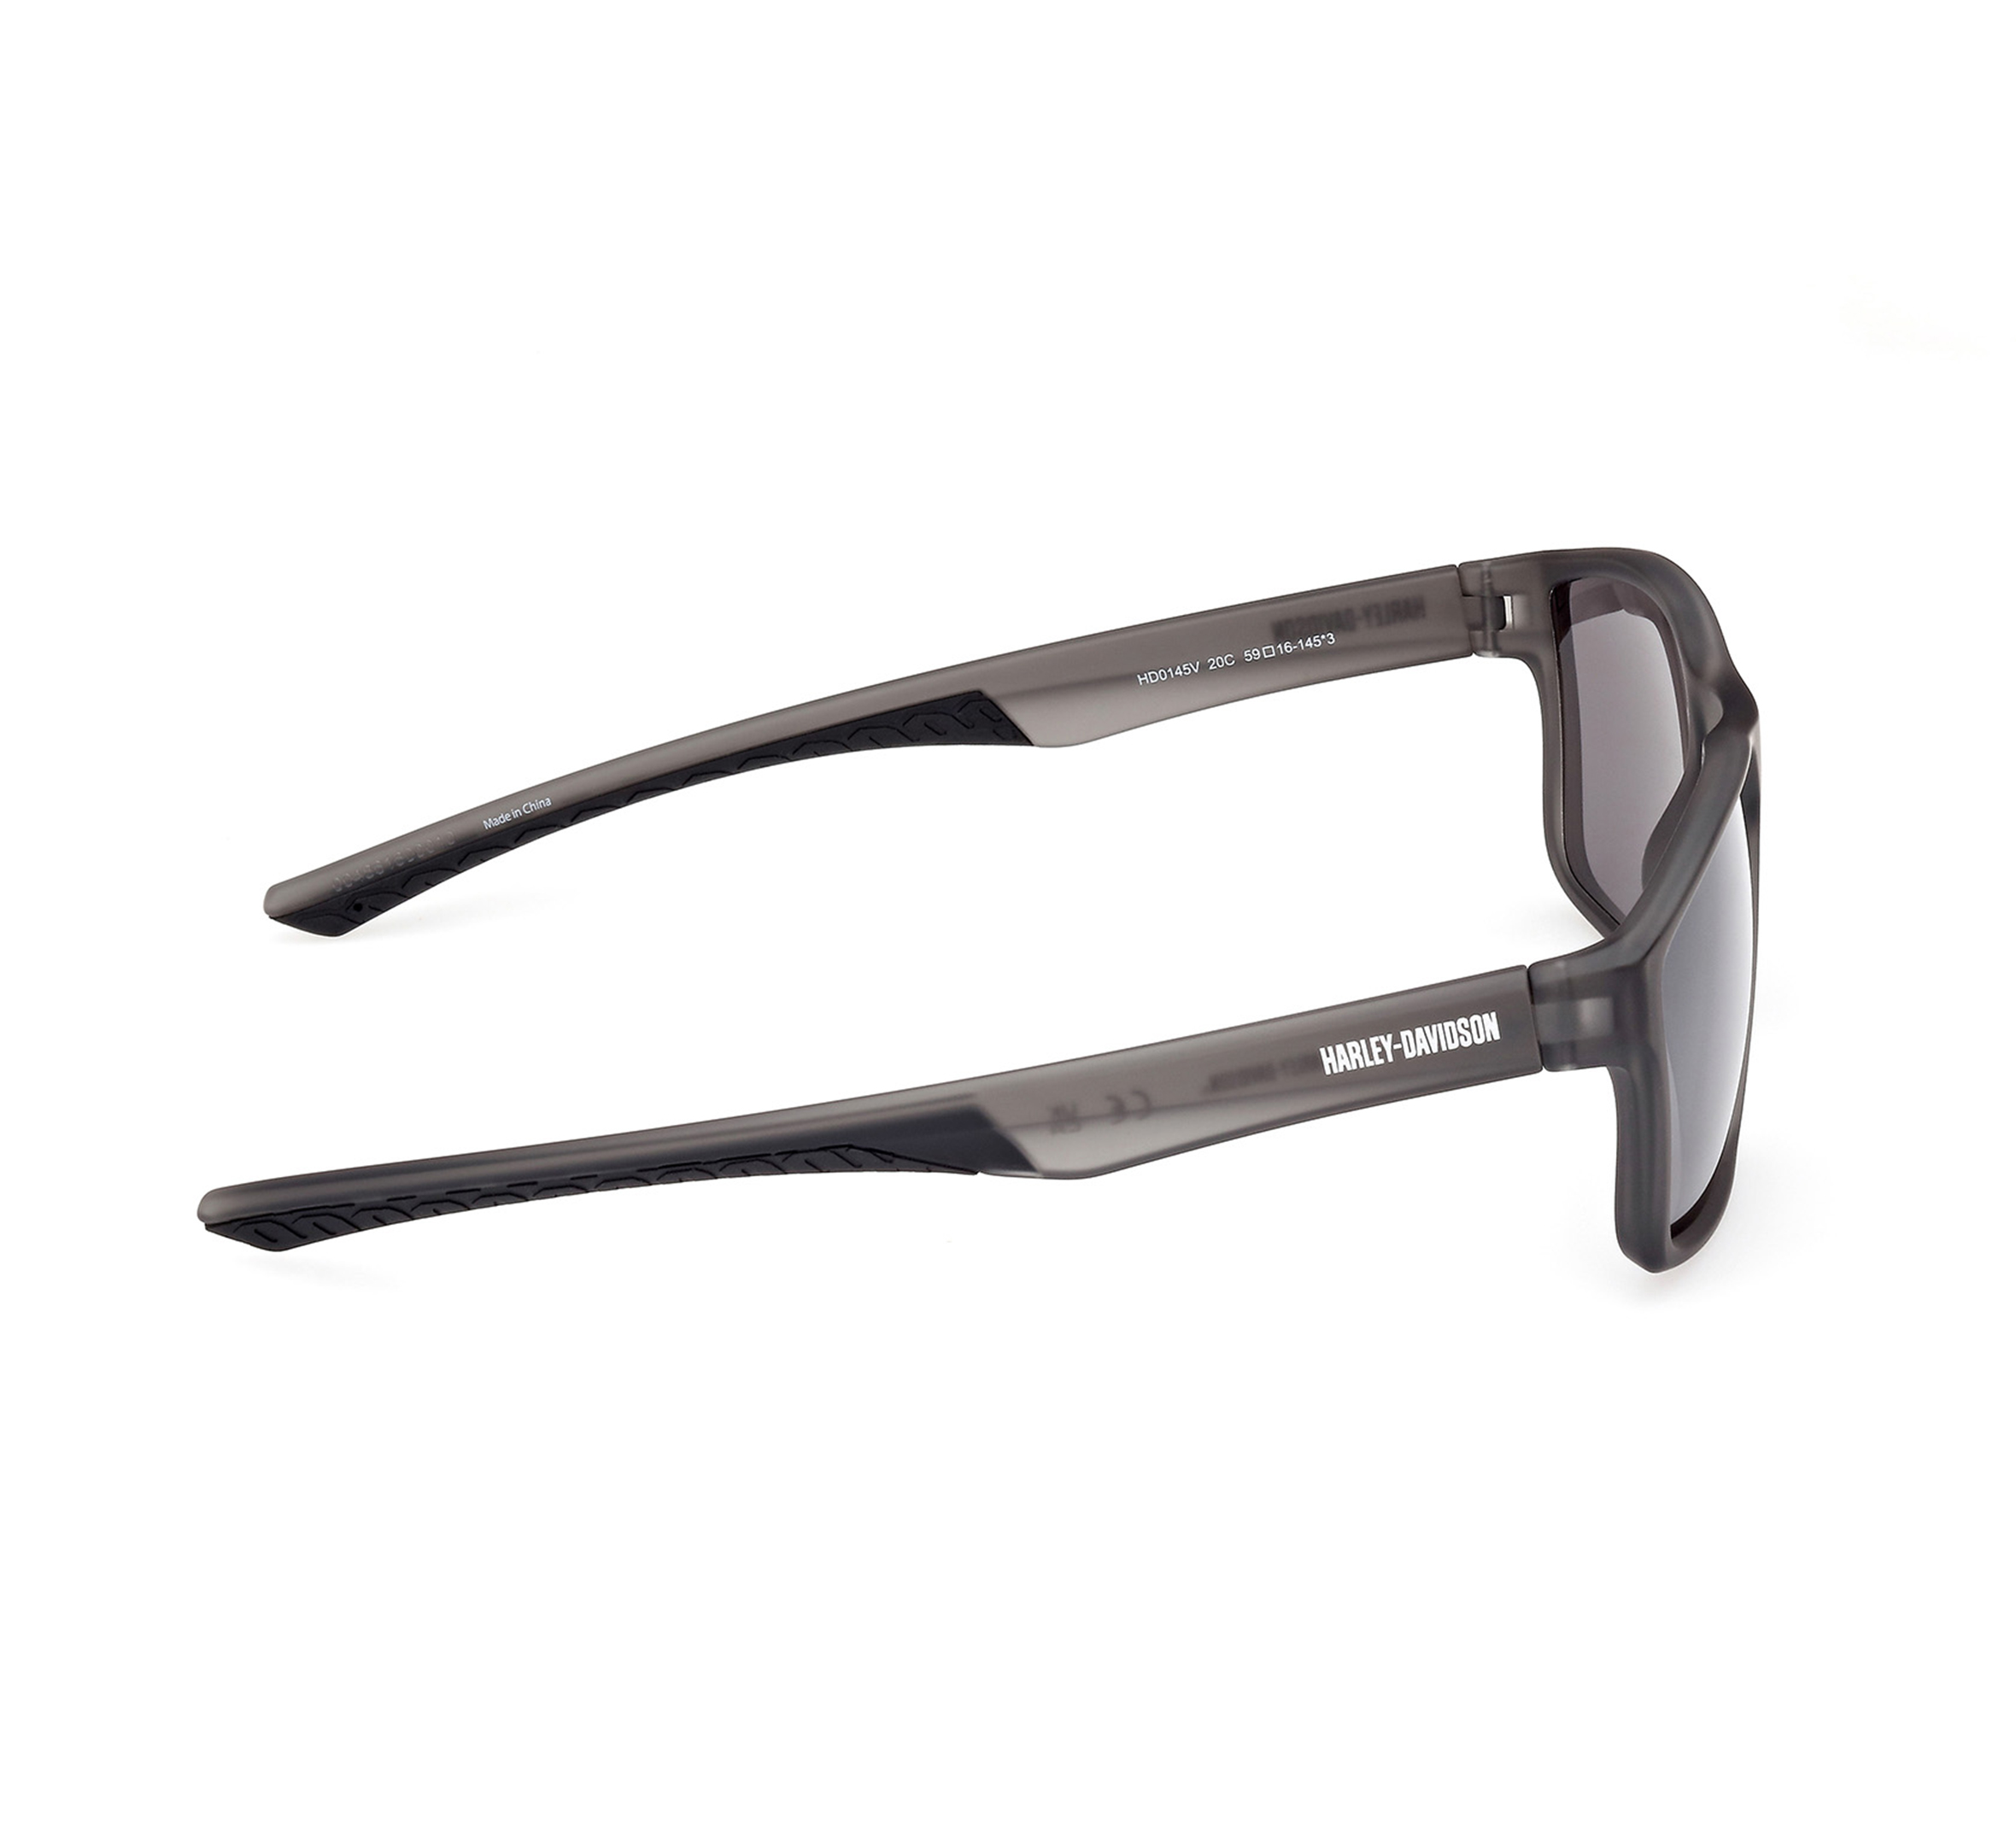 Casual Square Sunglasses - Smoked Grey